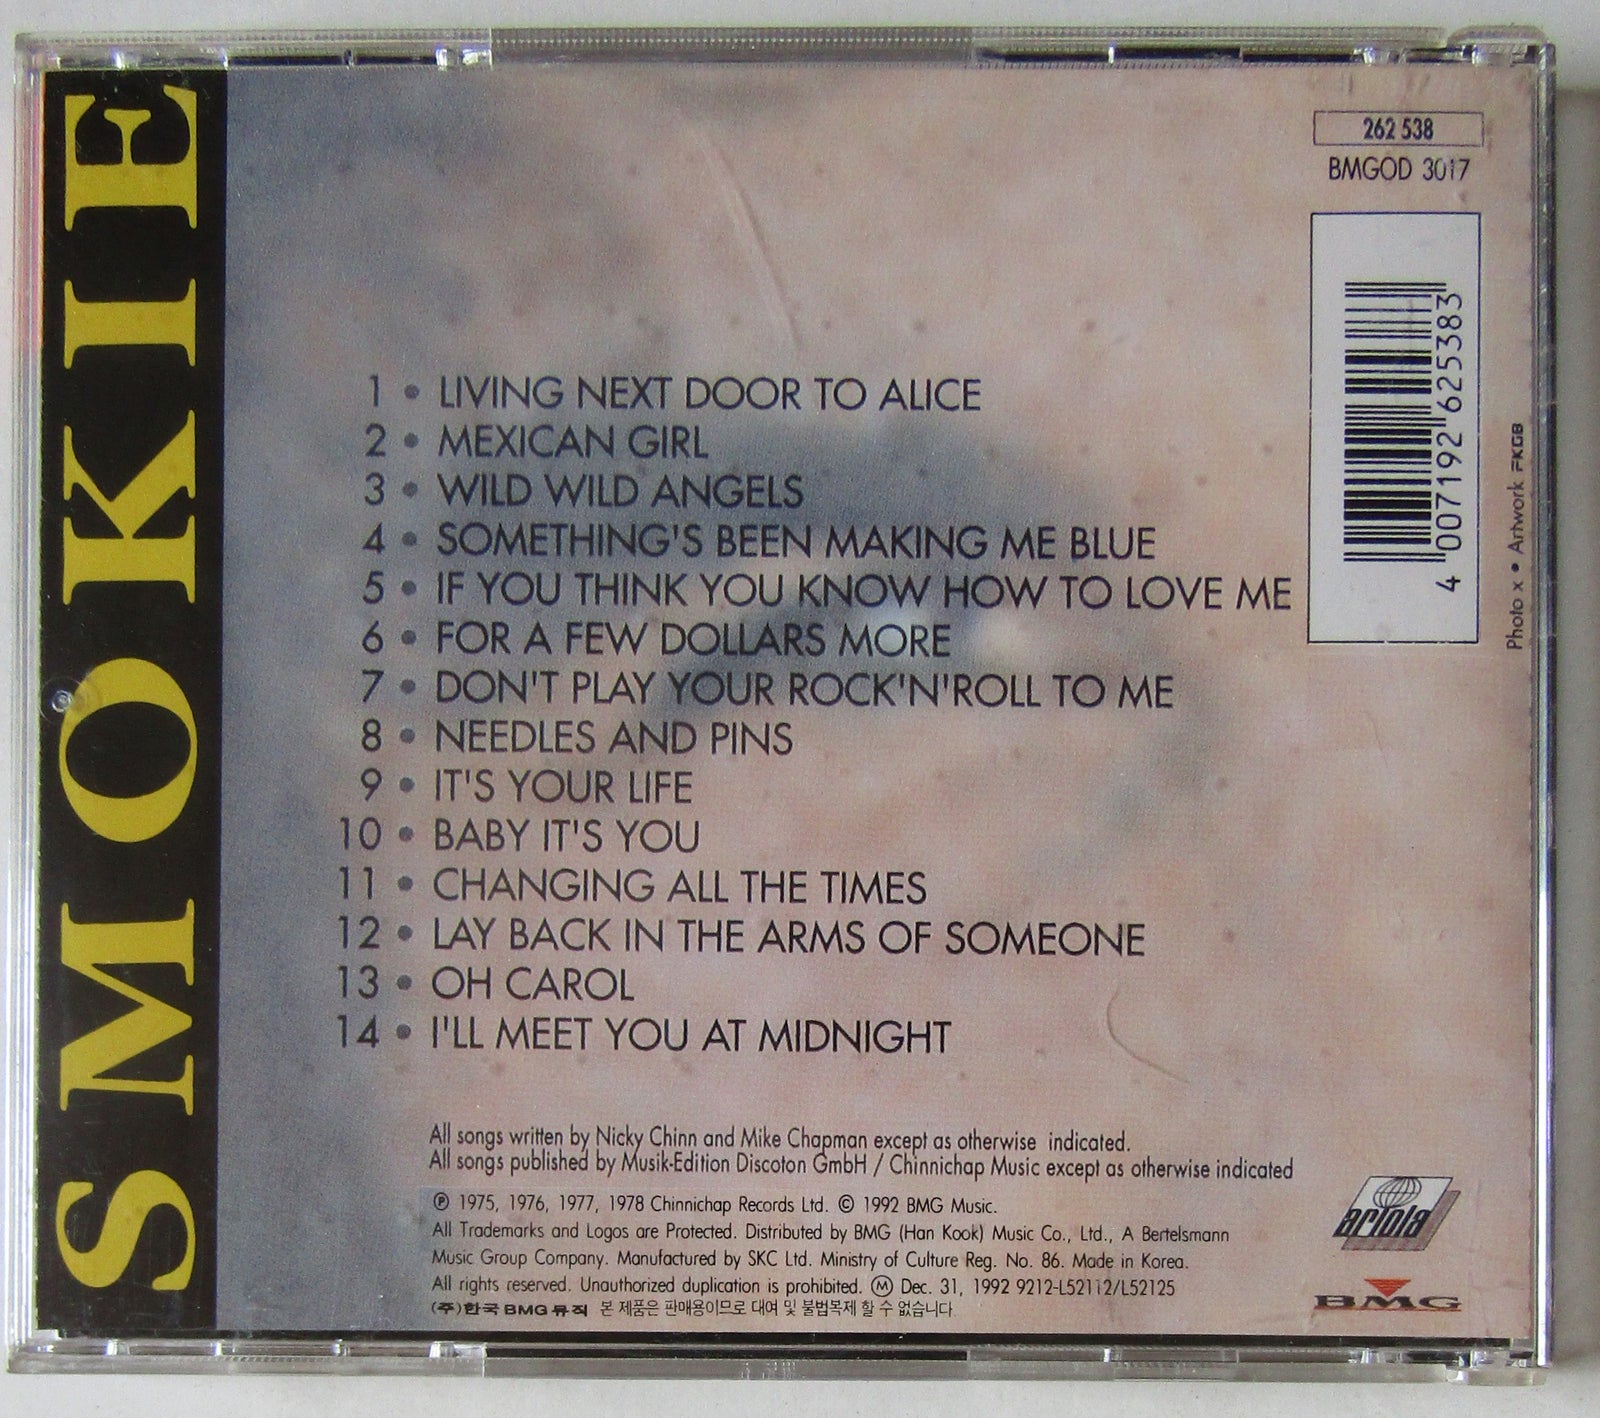 Smokie: The Collection, pop